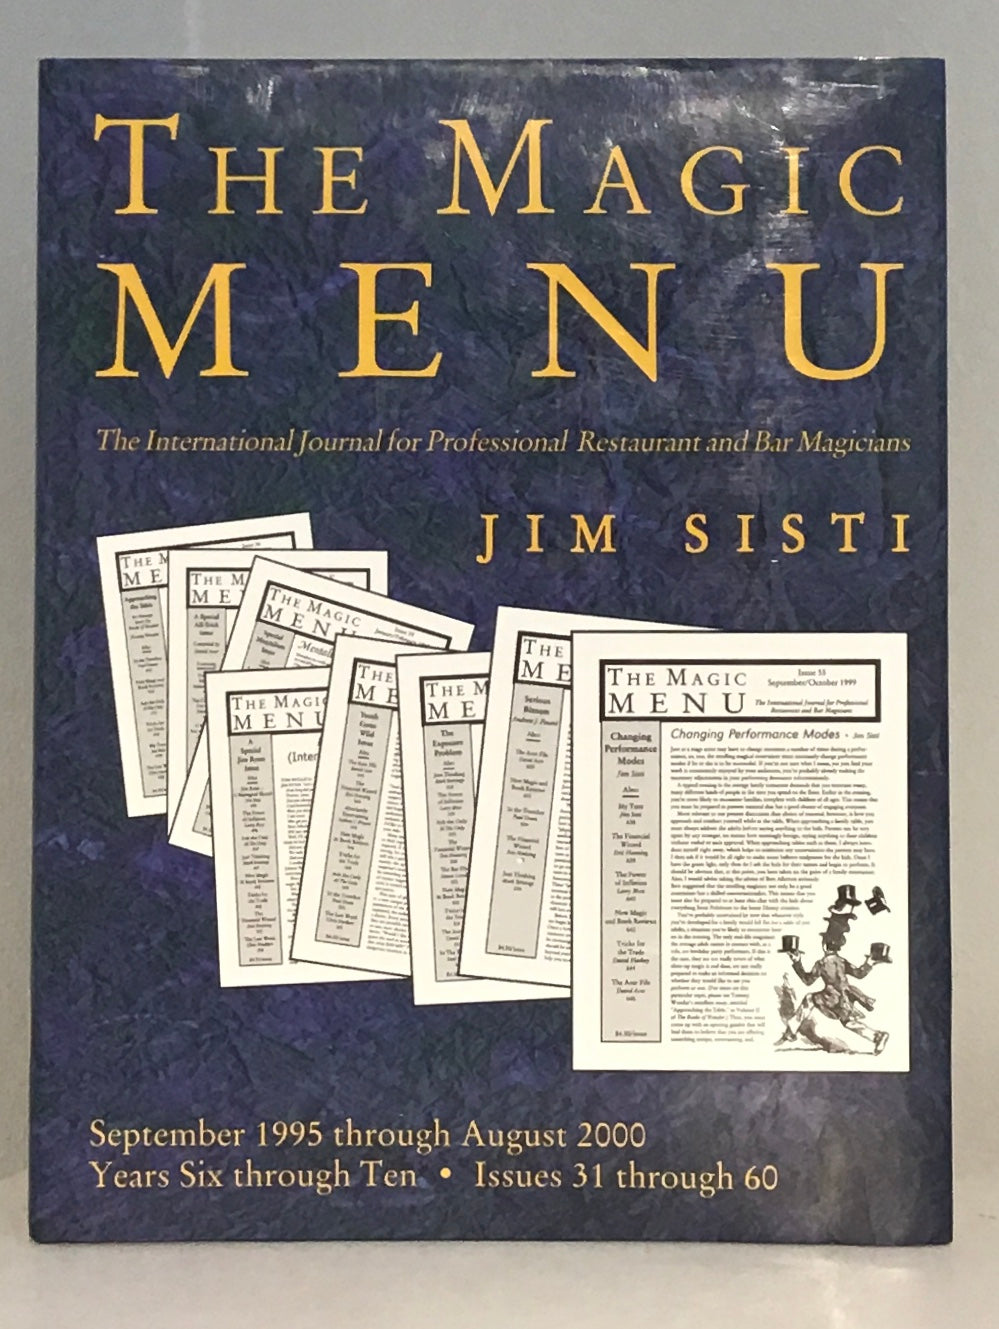 The Magic Menu: The International Journal for Professional Restaurant and Bar Magicians(September 1995 through August 2000 - Years Six through Ten)